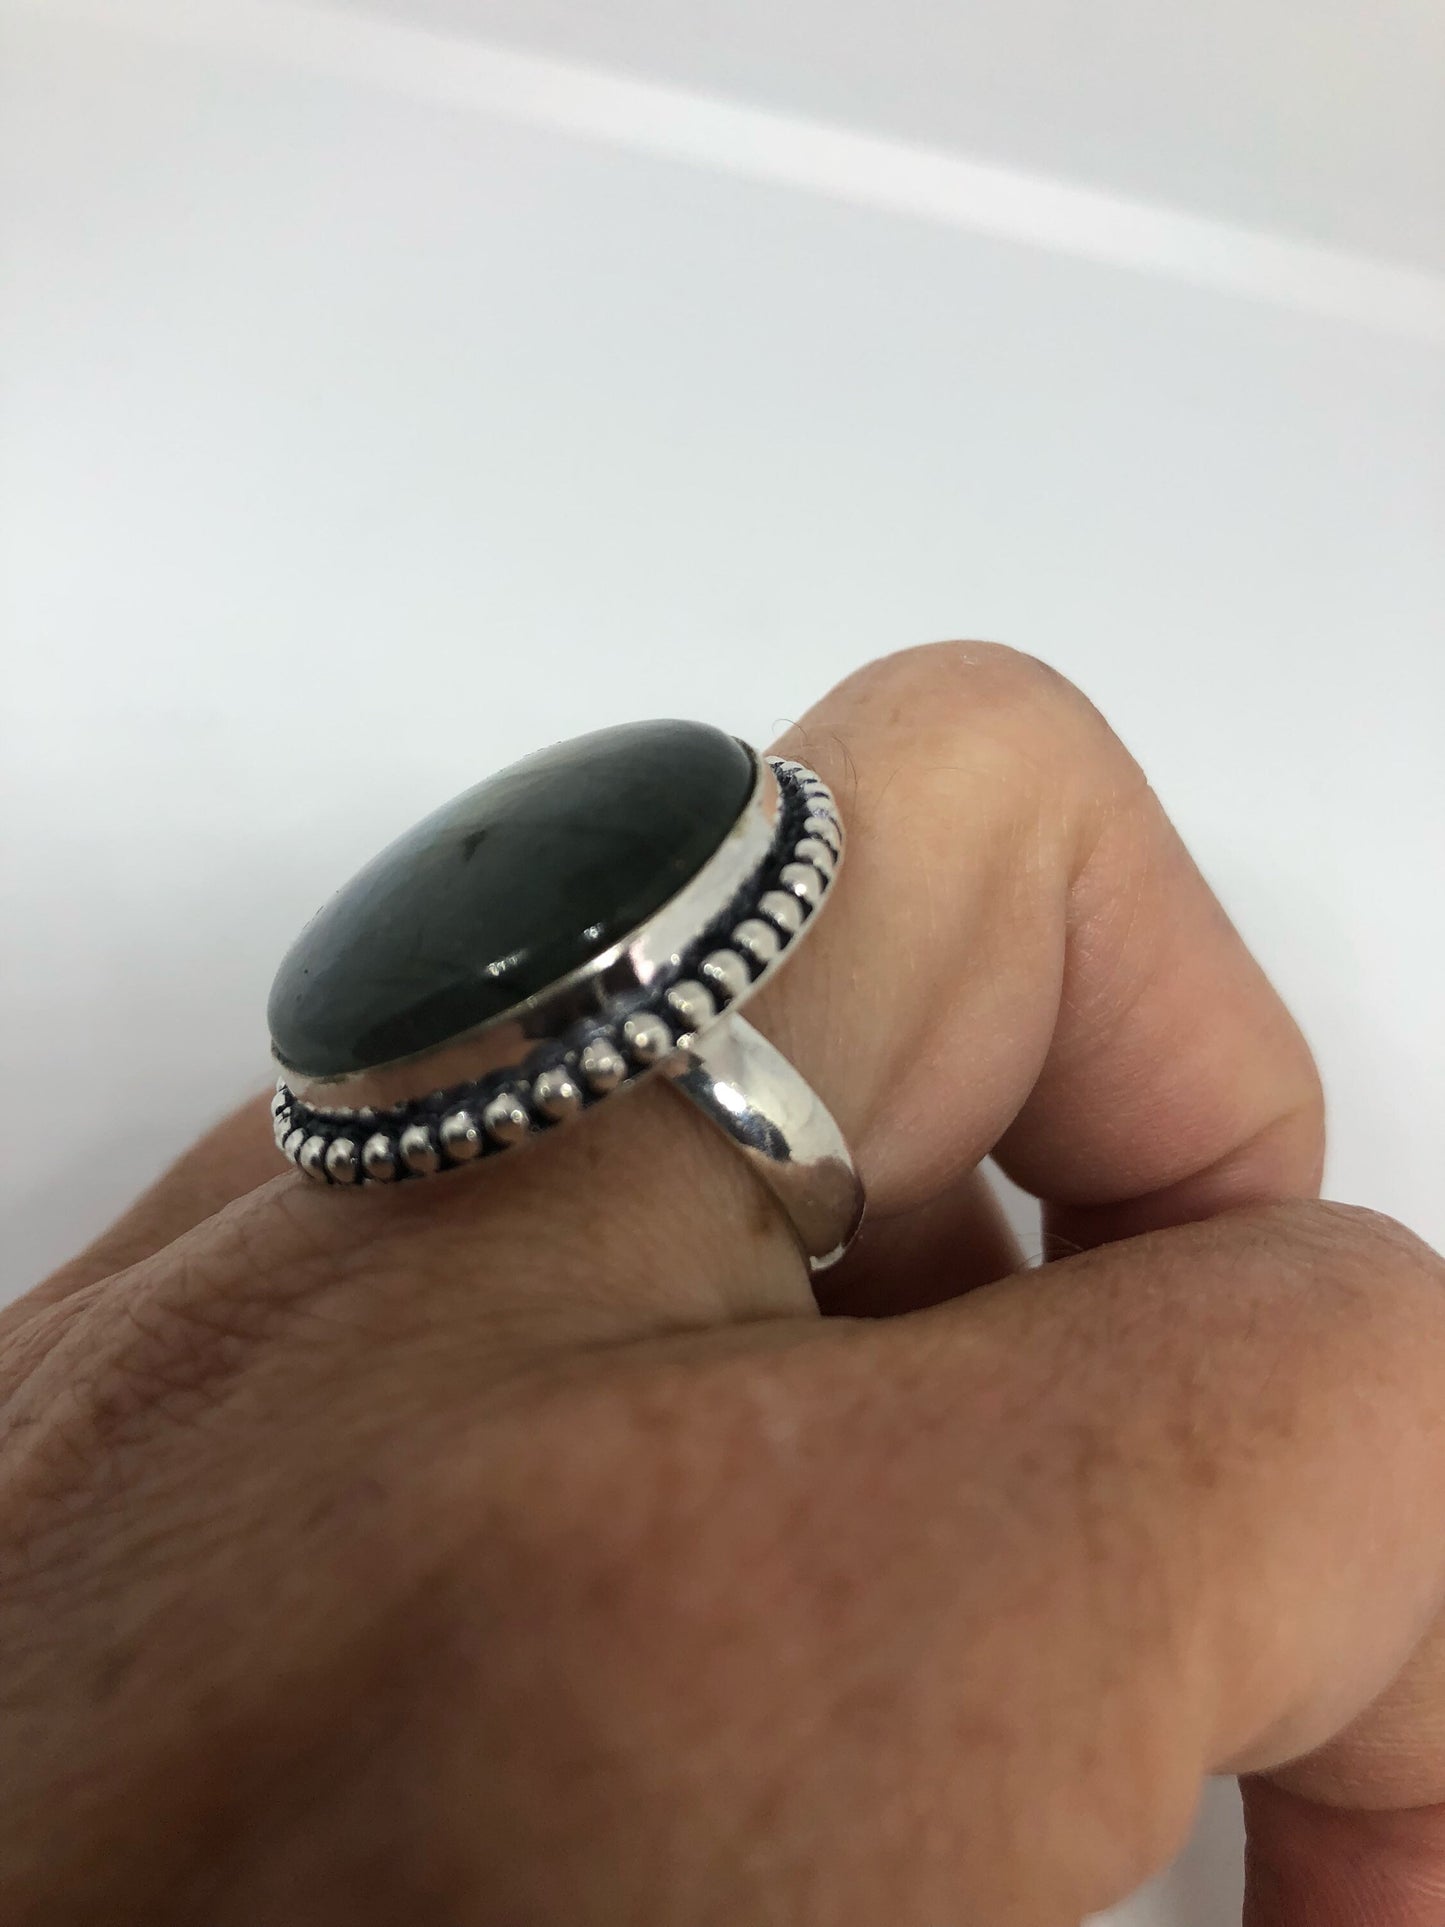 Vintage Large Labradorite Rainbow Moonstone Stone Silver Ring